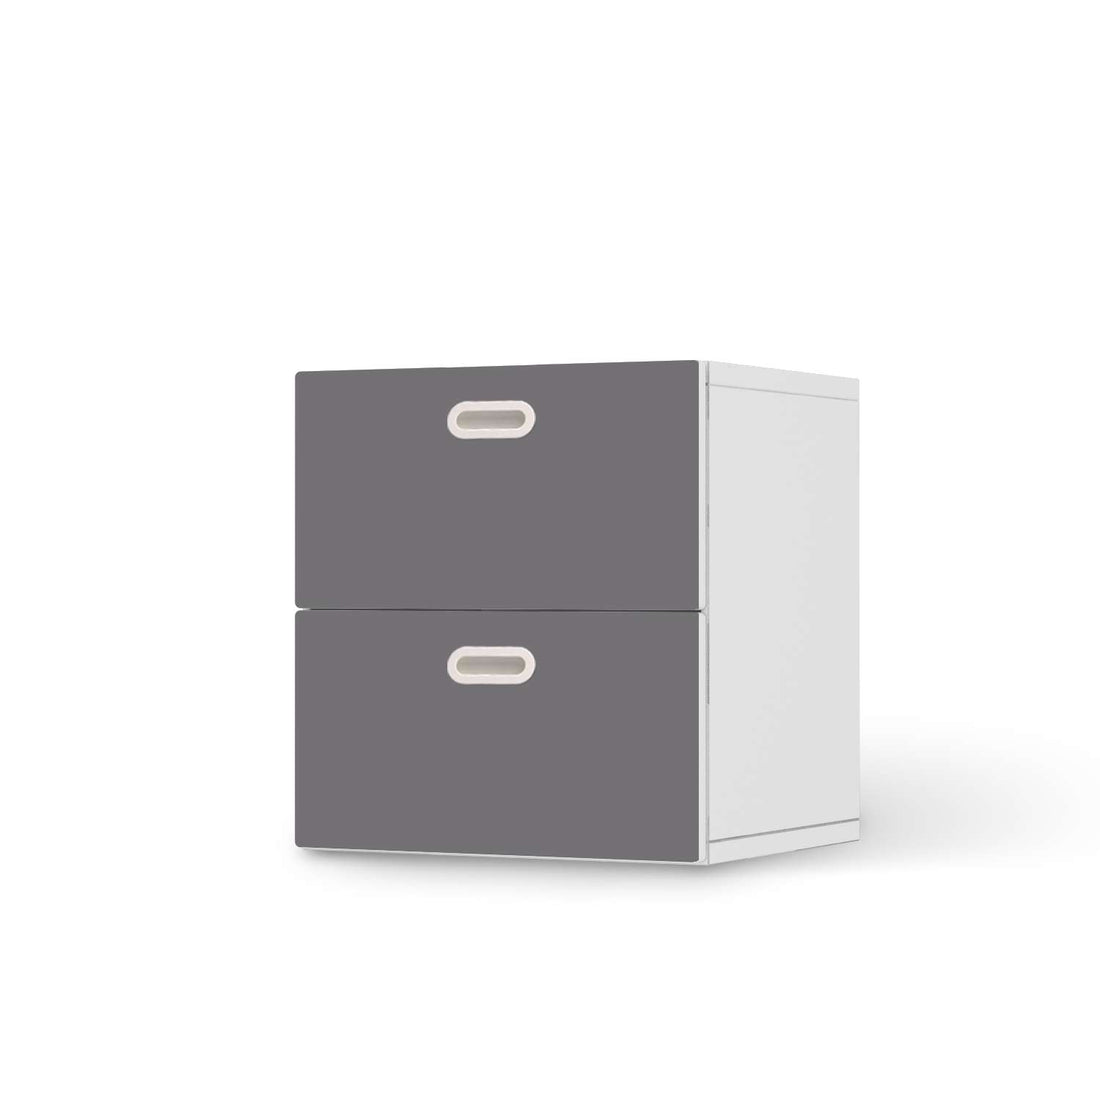 Klebefolie für Möbel Grau Light - IKEA Stuva / Fritids Kommode - 2 Schubladen  - weiss